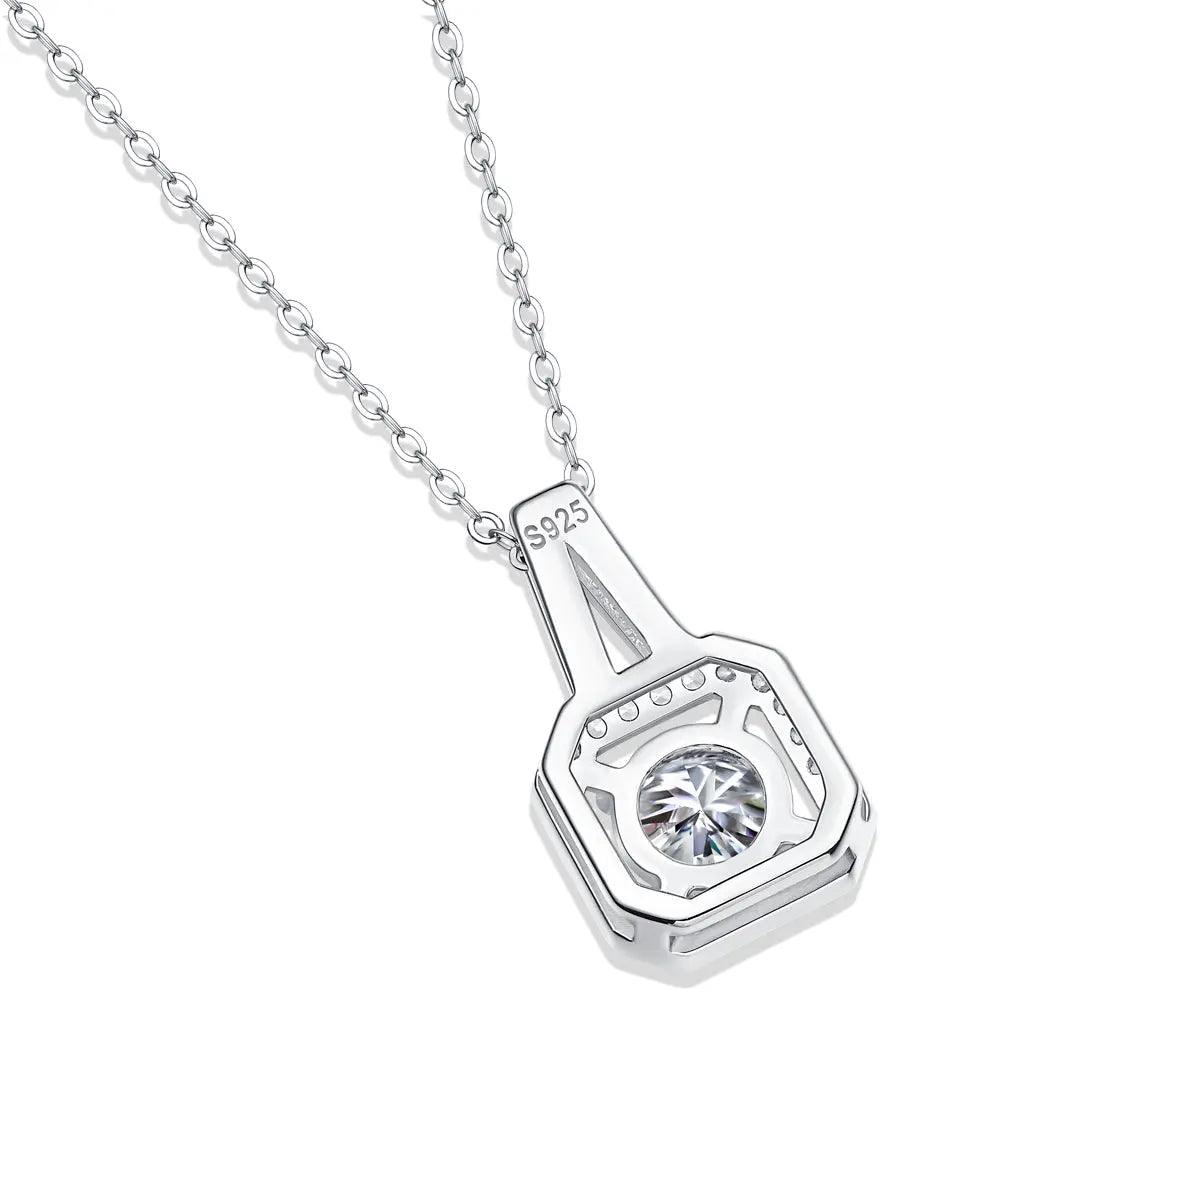 FairyLocus “Cherish Moment” 1ct Moissanite Pendant Necklace Sterling Silver D Color VVS1 Clarity Brilliant Round Cut Lab Created Diamond Necklace FLZZNLMS15 FairyLocus